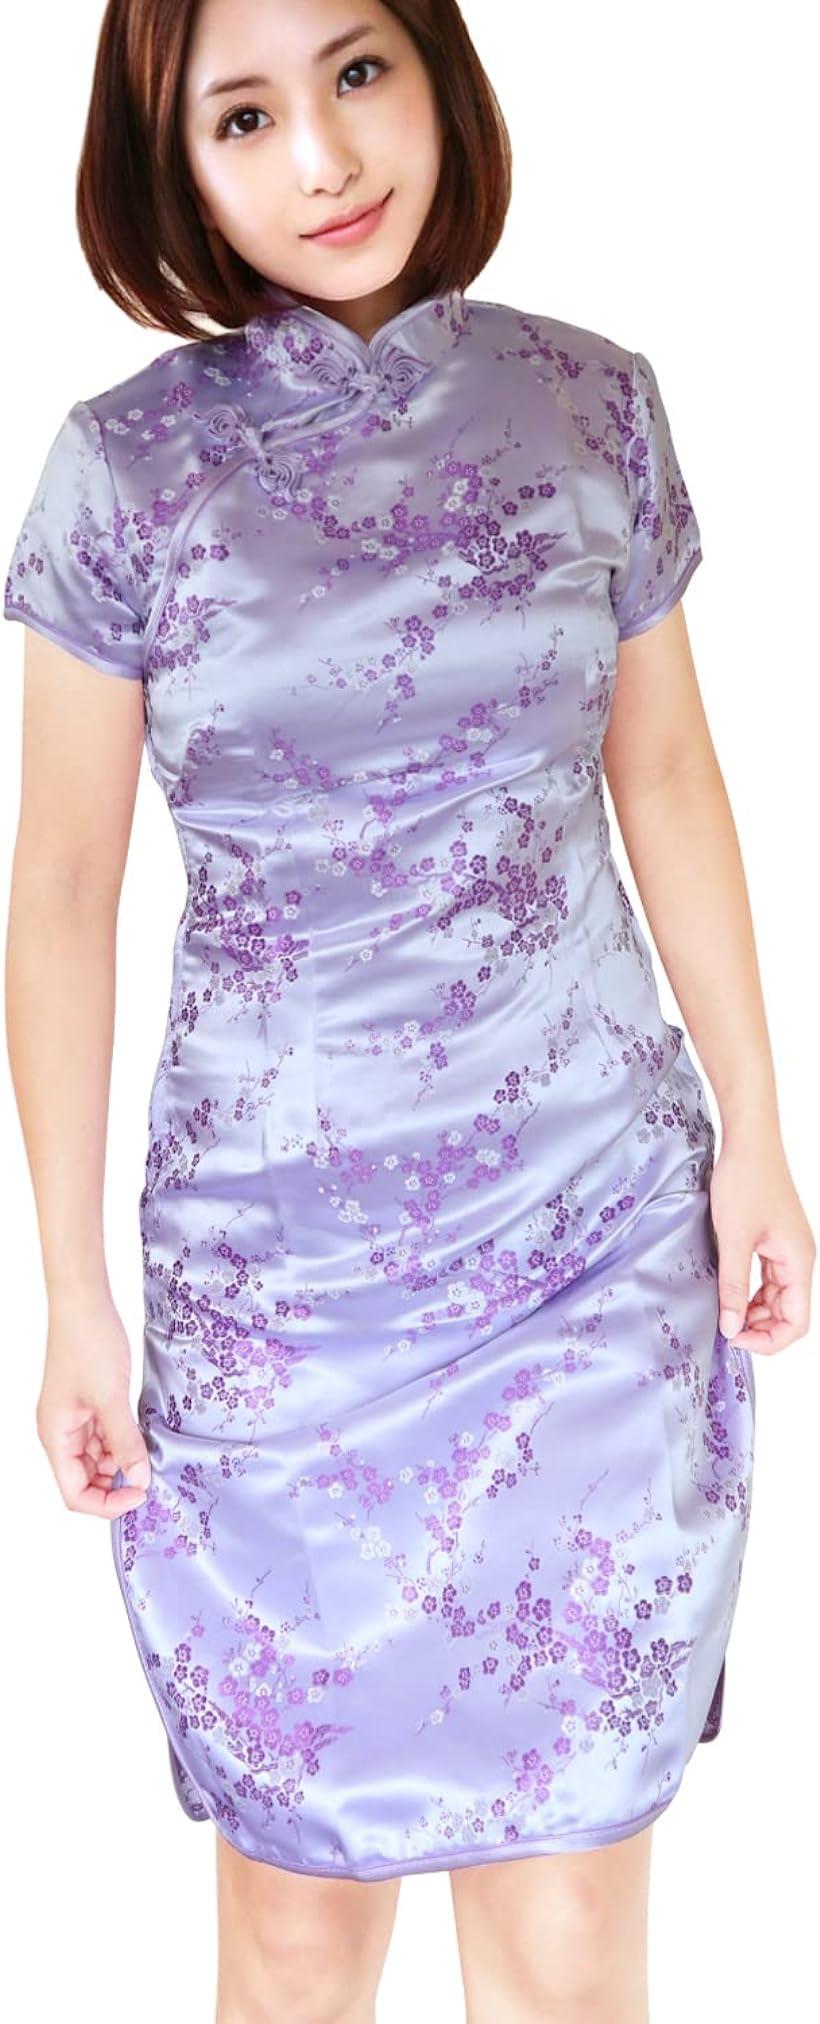 [Rikkey] チャイナドレス コスプレ チャイナ服 半袖 膝丈 チャイナワンピース (XL, 淡紫)